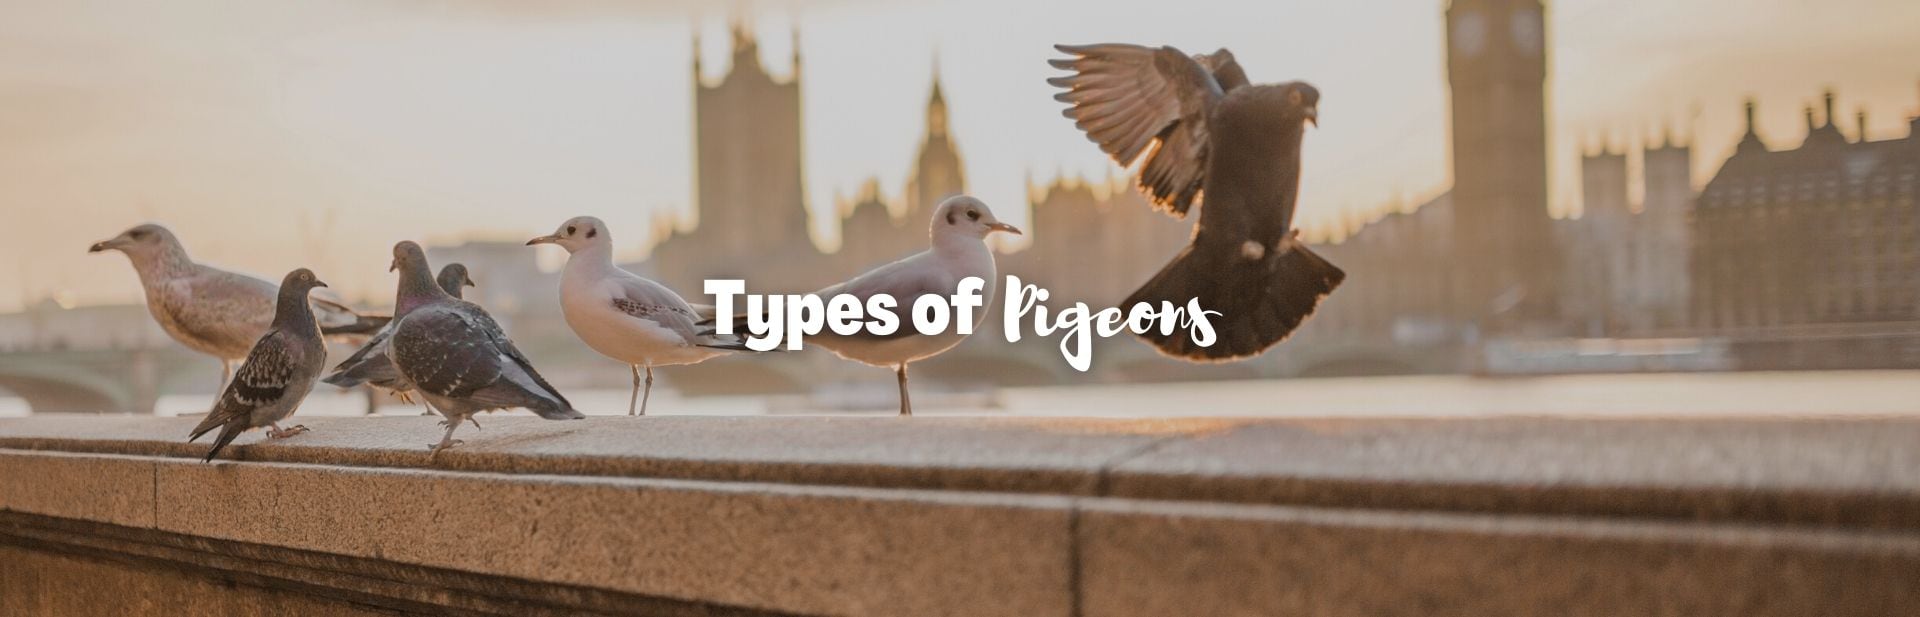 35 Types of Pigeons: Exploring Their Fascinating Urban Diversity